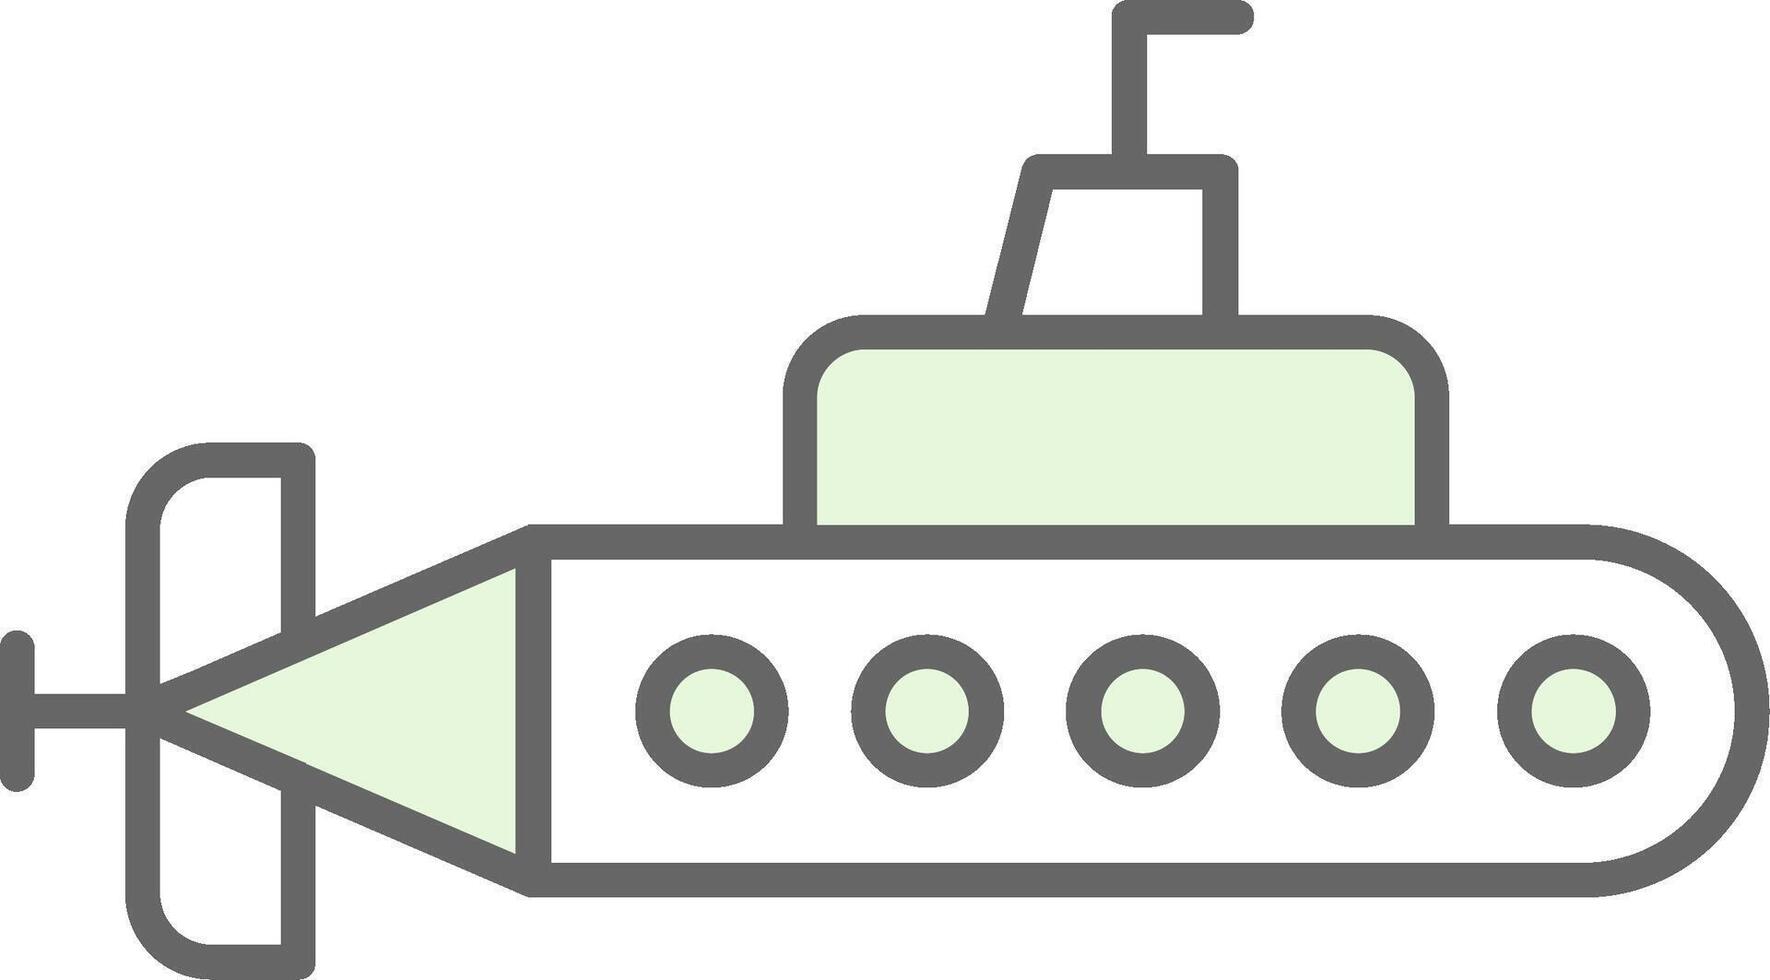 submarino potra ícone vetor